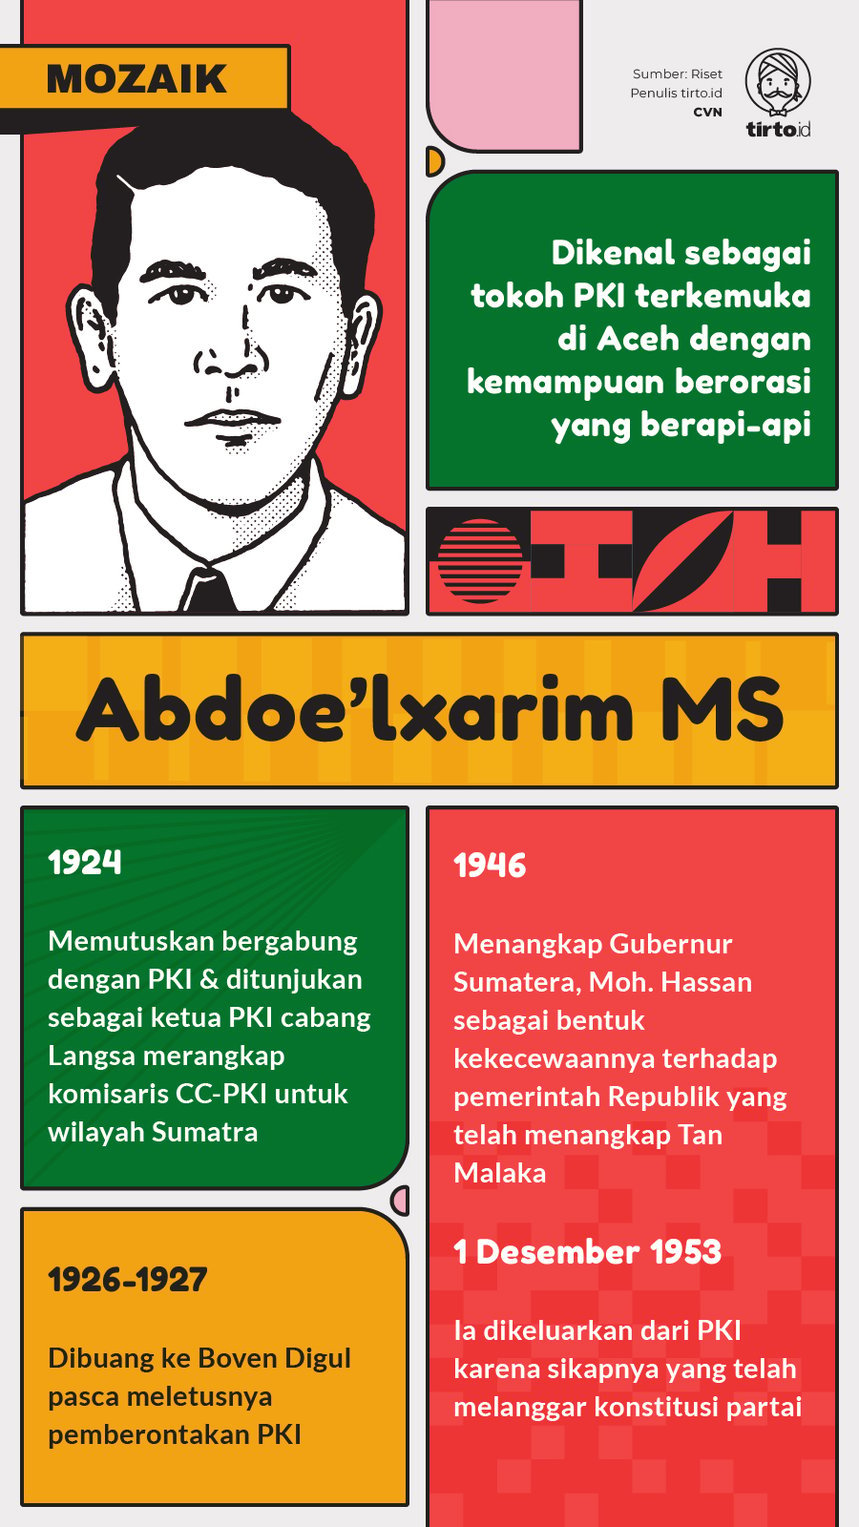 Infografik Mozaik Abdul Xarim MS